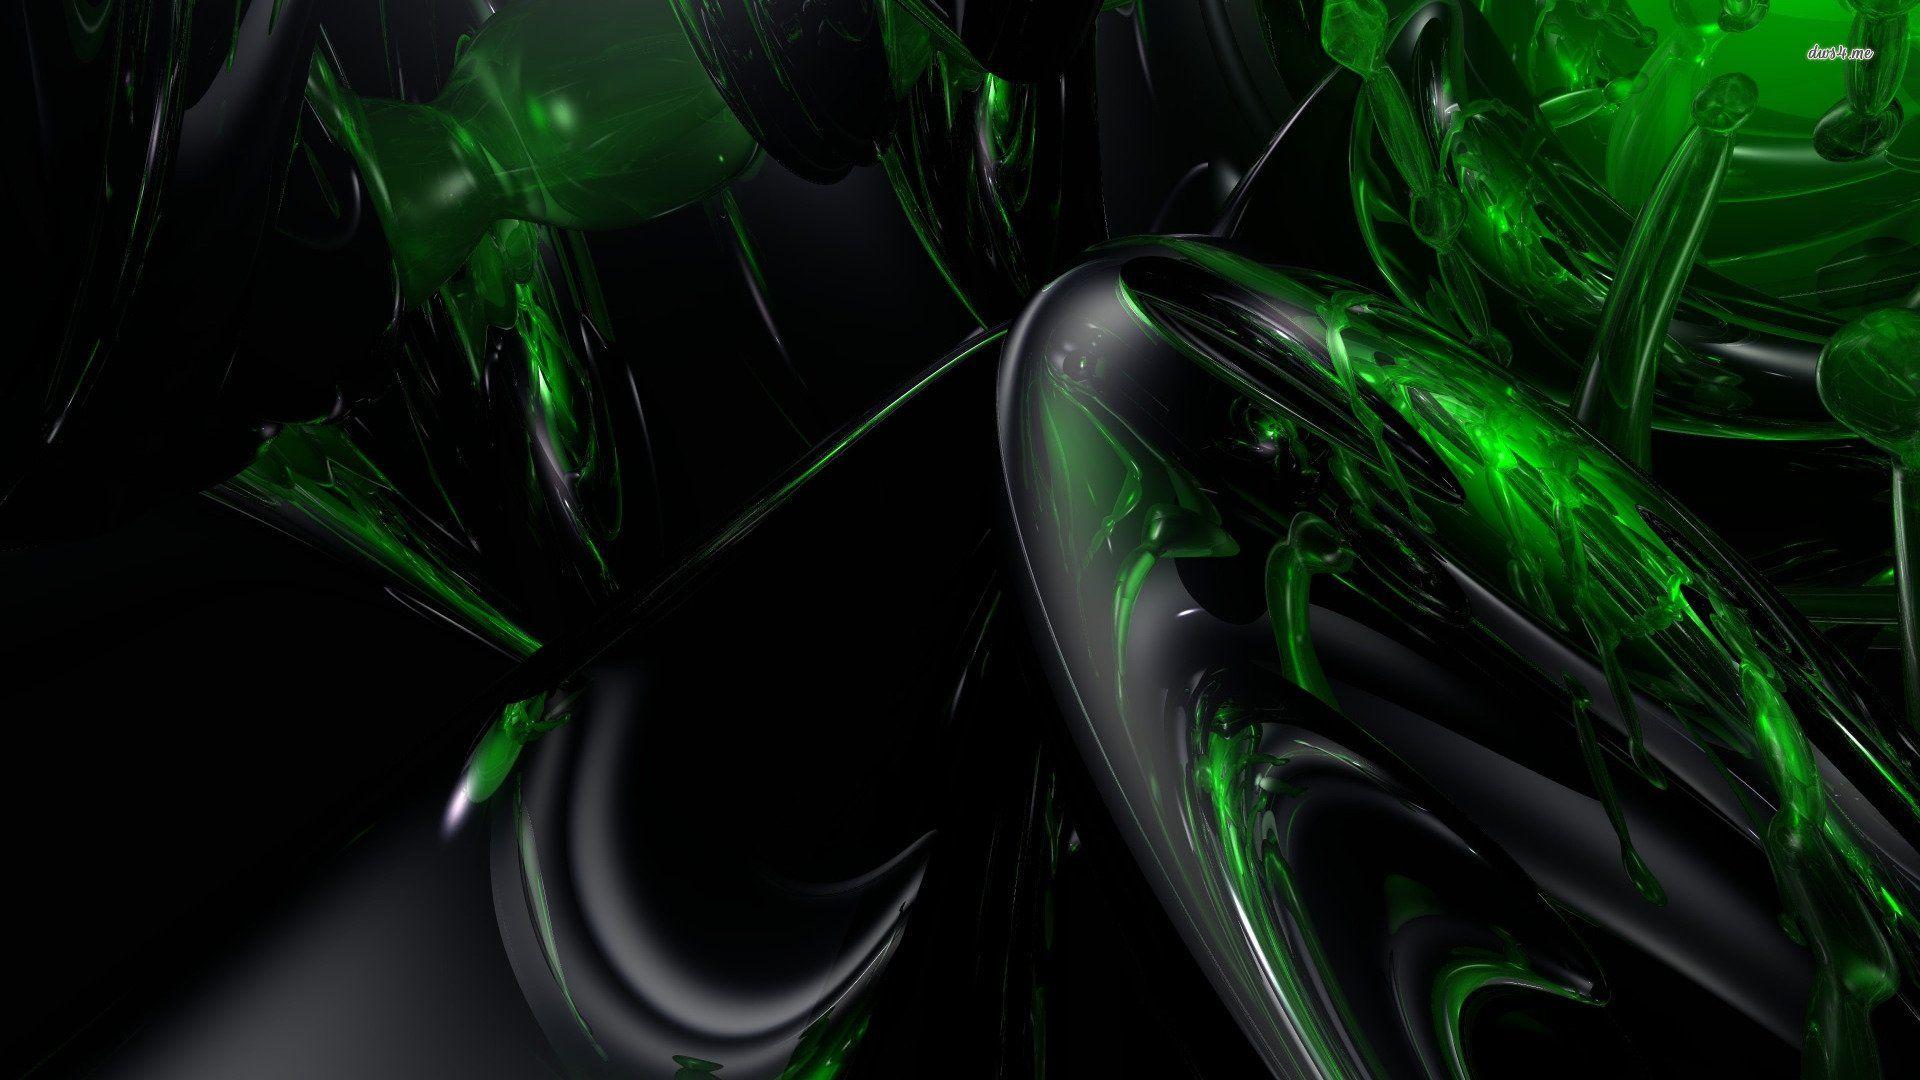 Dark Green Abstract Hd Wallpapers - Top Free Dark Green Abstract Hd